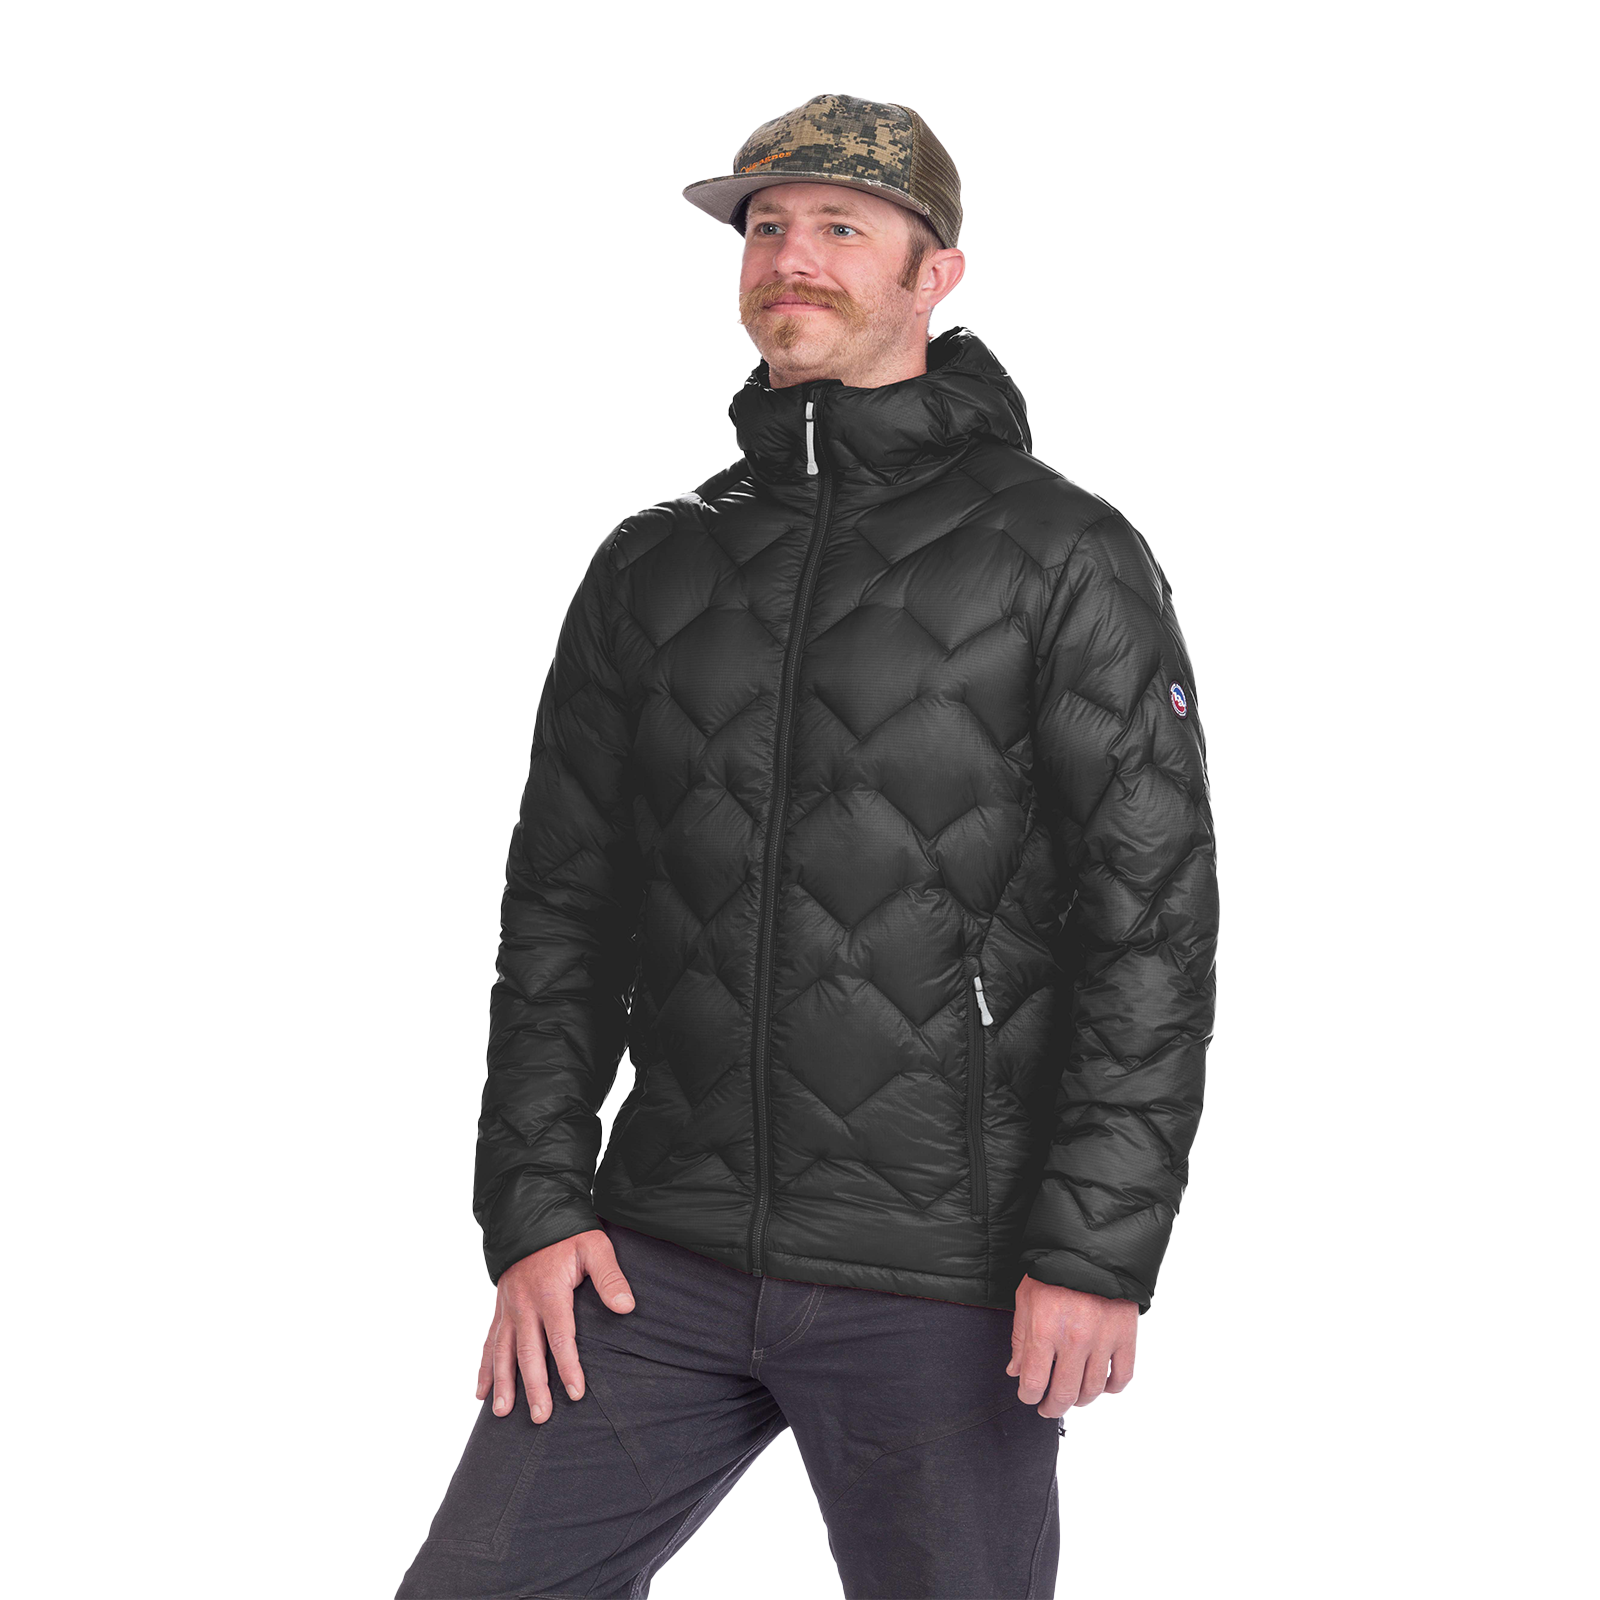 Men's Zetto Ultralight Jacket